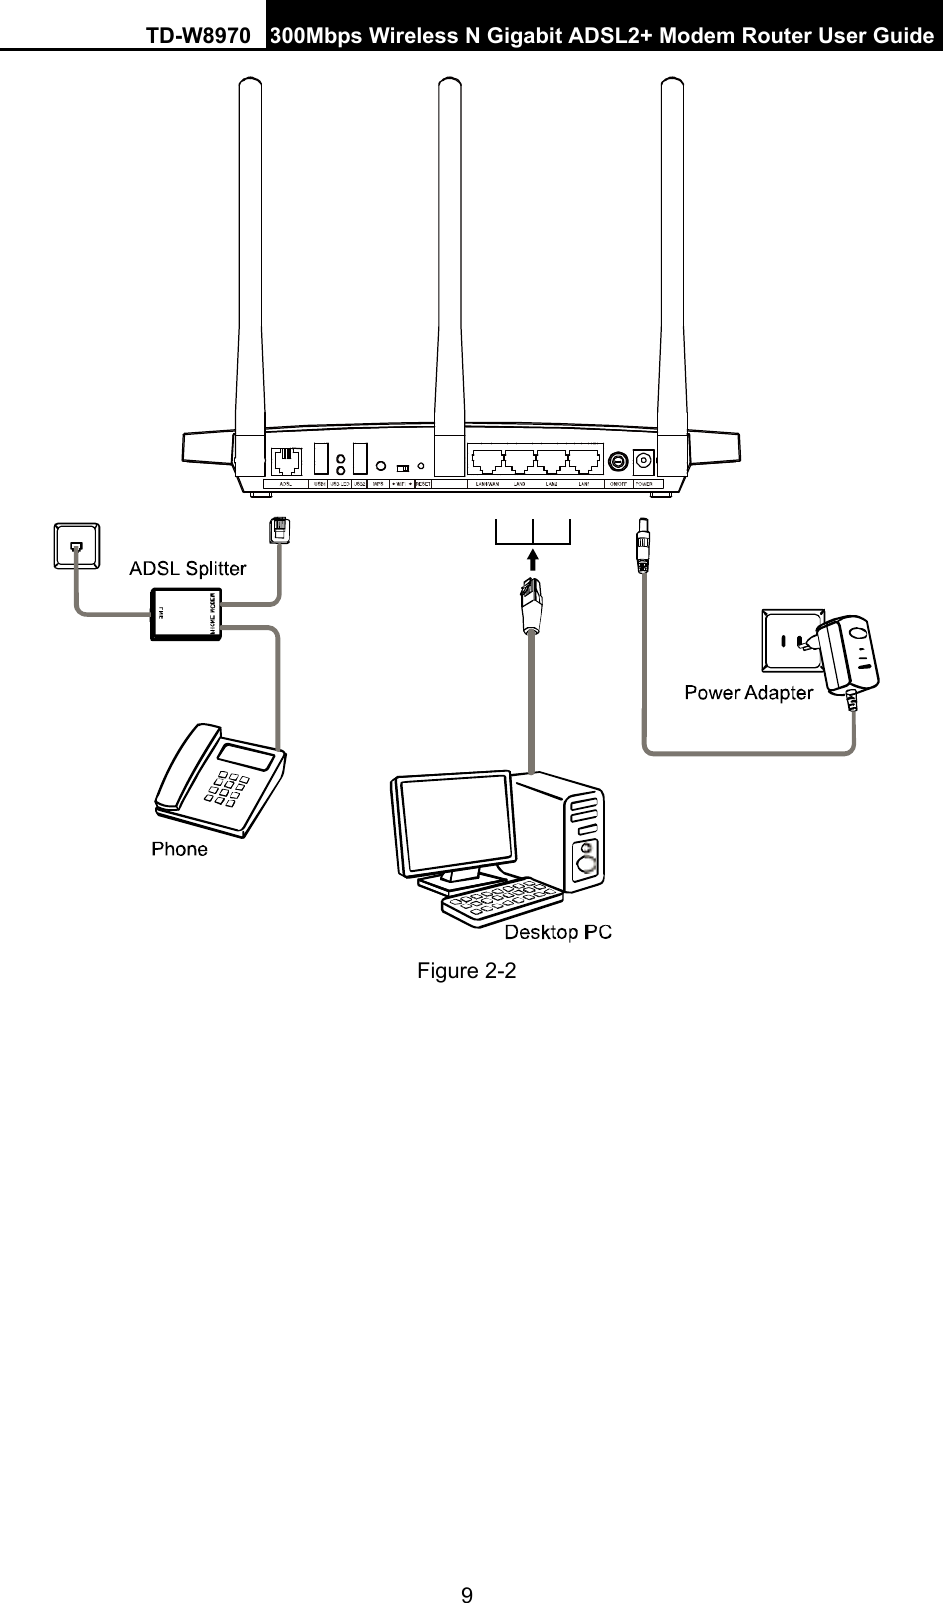 TD-W8970 300Mbps Wireless N Gigabit ADSL2+ Modem Router User Guide 9  Figure 2-2 